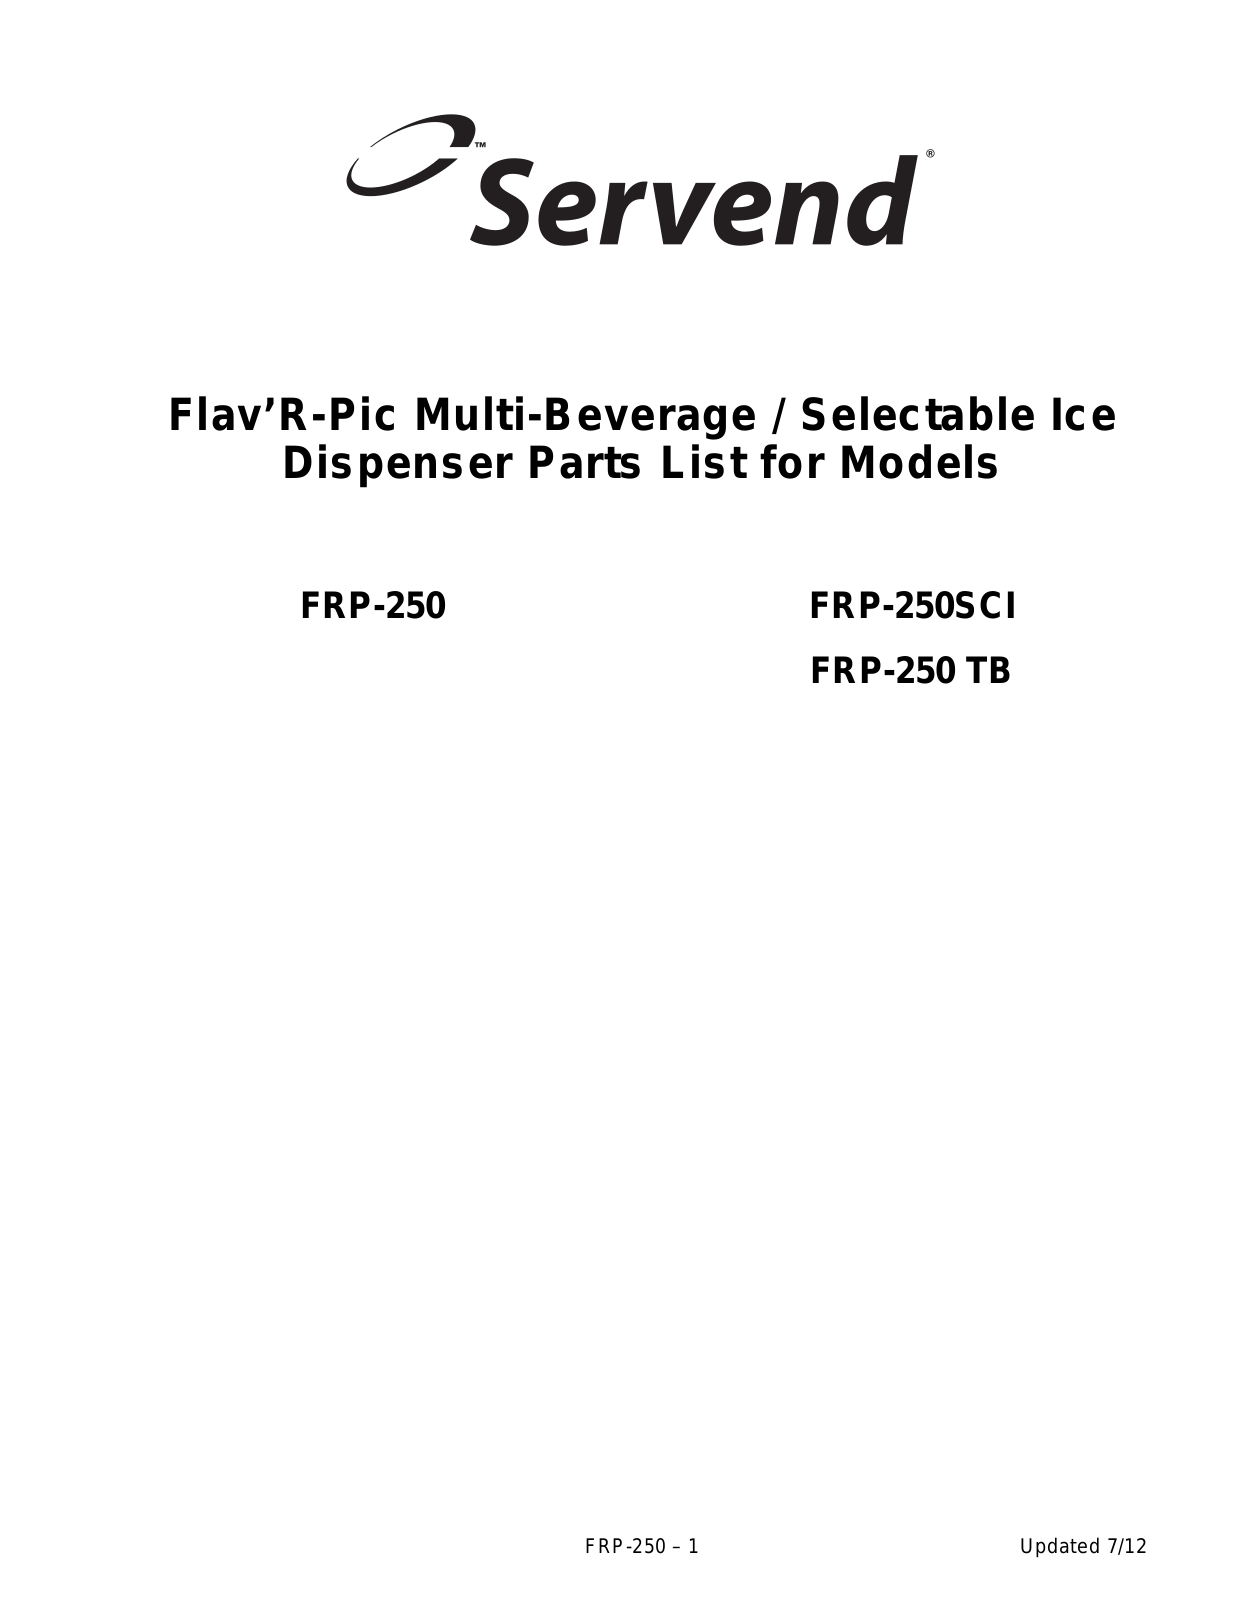 Servend FRP-250 TB Parts List